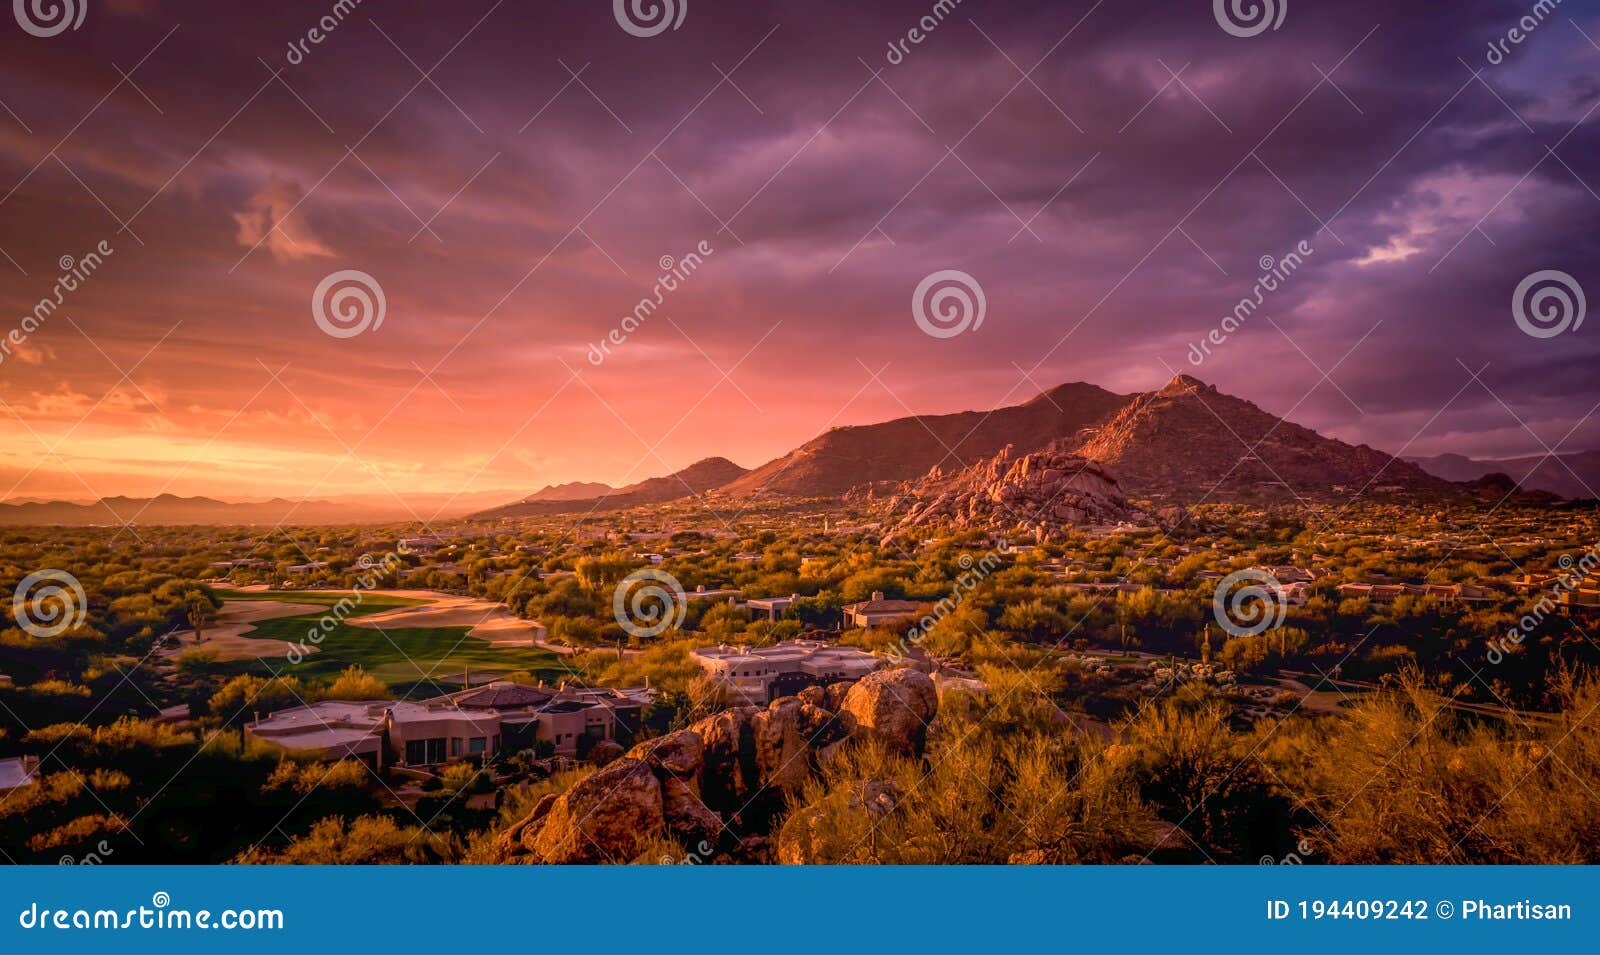 golden sunset over north scottsdale,arizona.